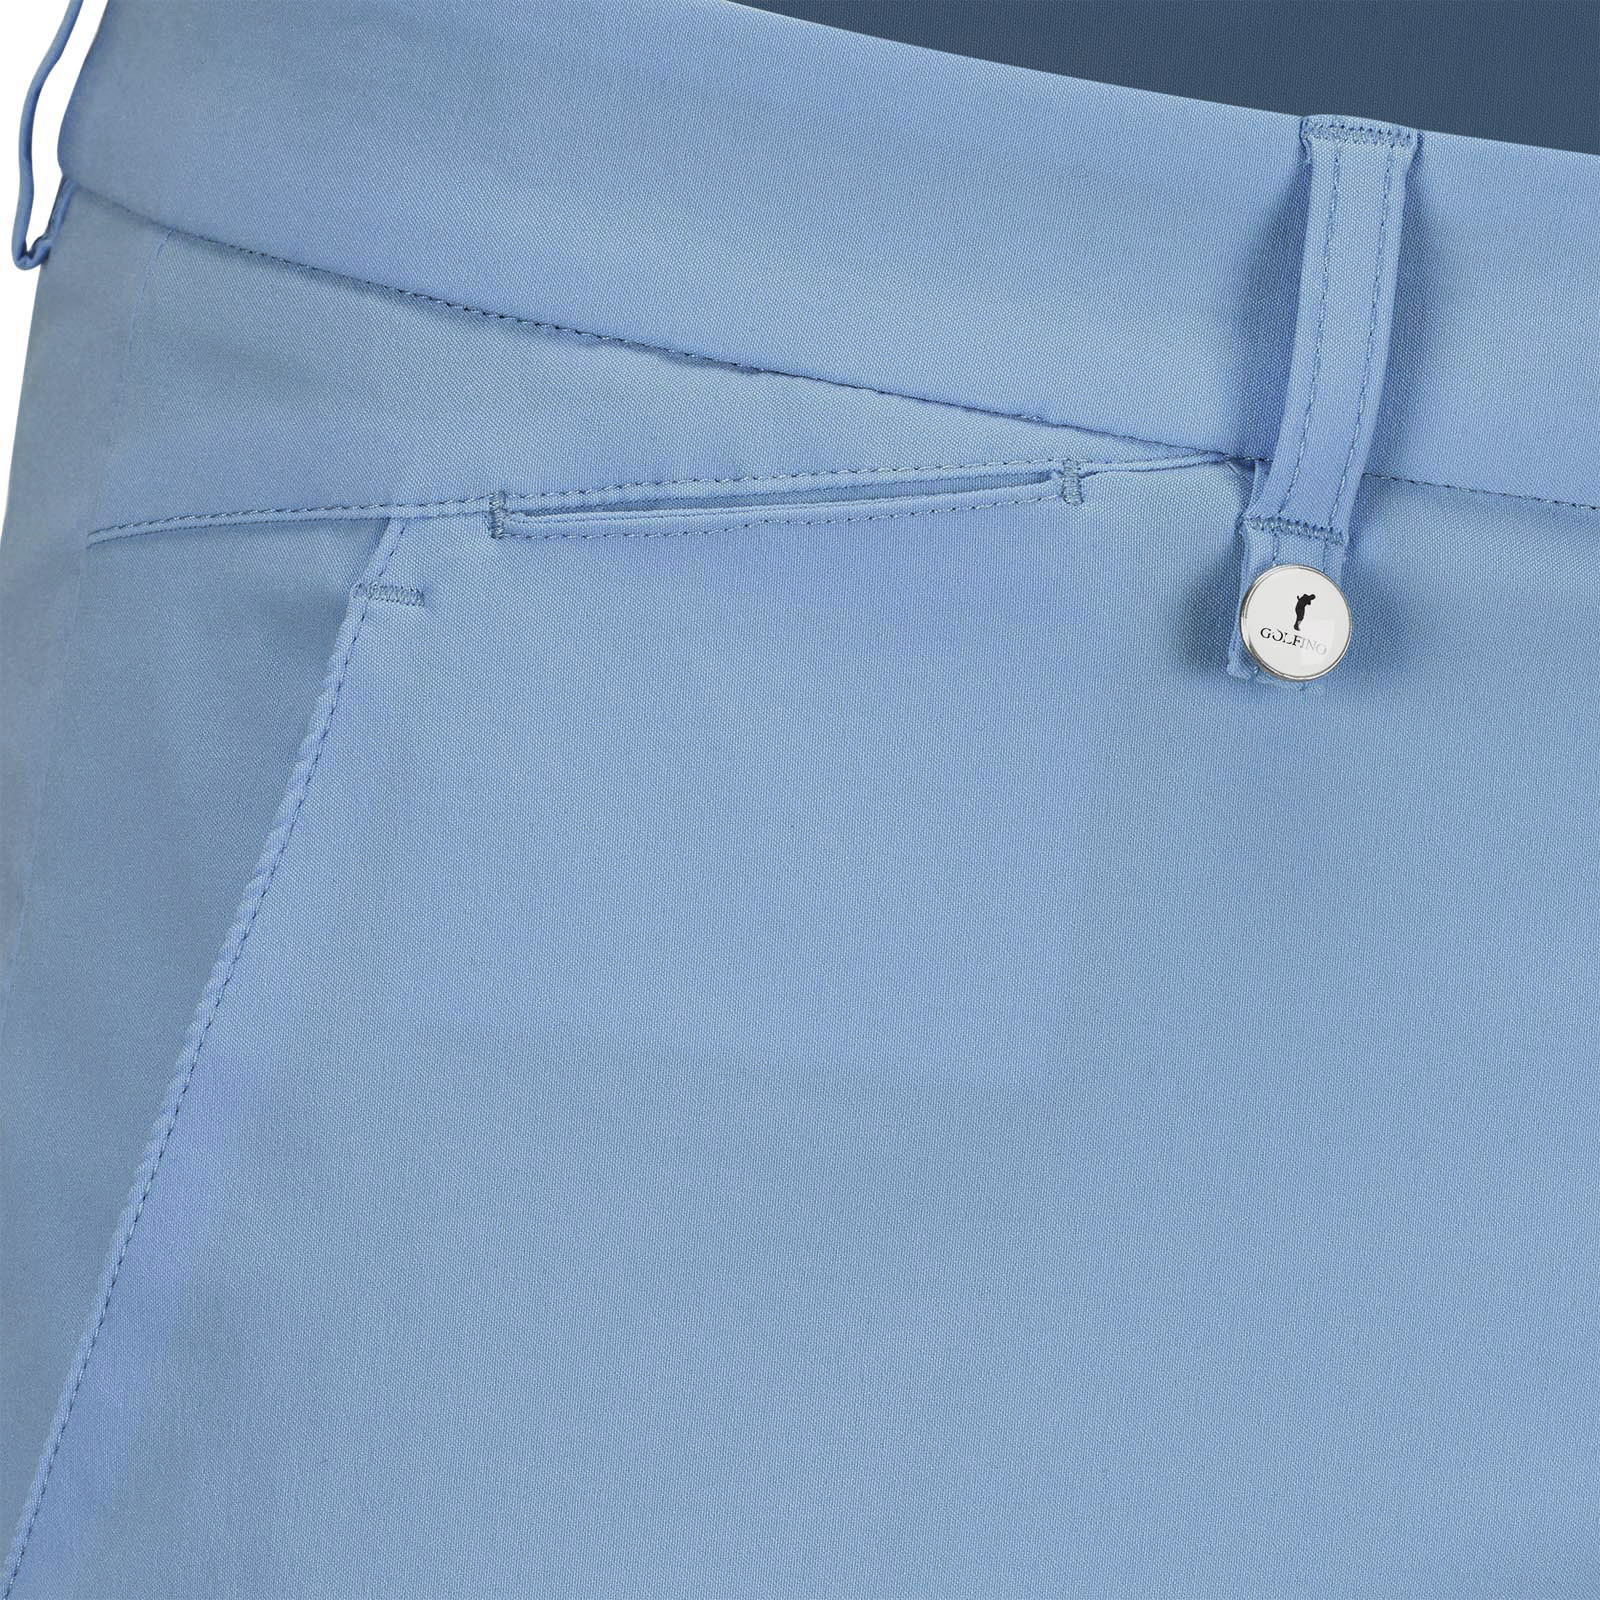 Pantalon de golf techno-stretch pour homme avec protection anti-UV